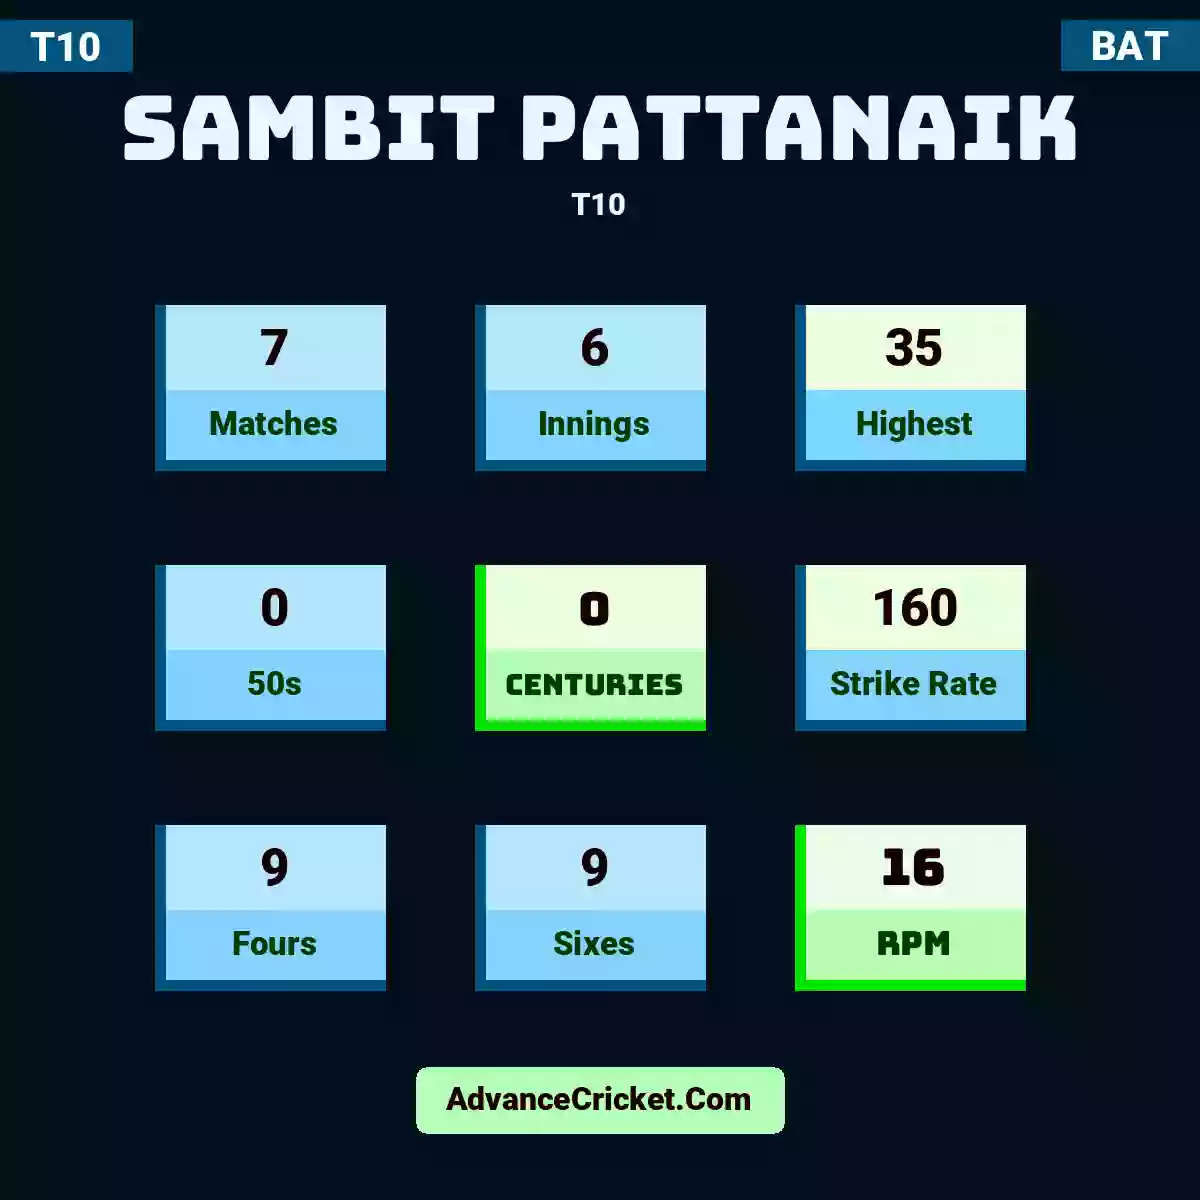 Sambit Pattanaik T10 , Sambit Pattanaik played 7 matches, scored 35 runs as highest, 0 half-centuries, and 0 centuries, with a strike rate of 160. S.Pattanaik hit 9 fours and 9 sixes, with an RPM of 16.